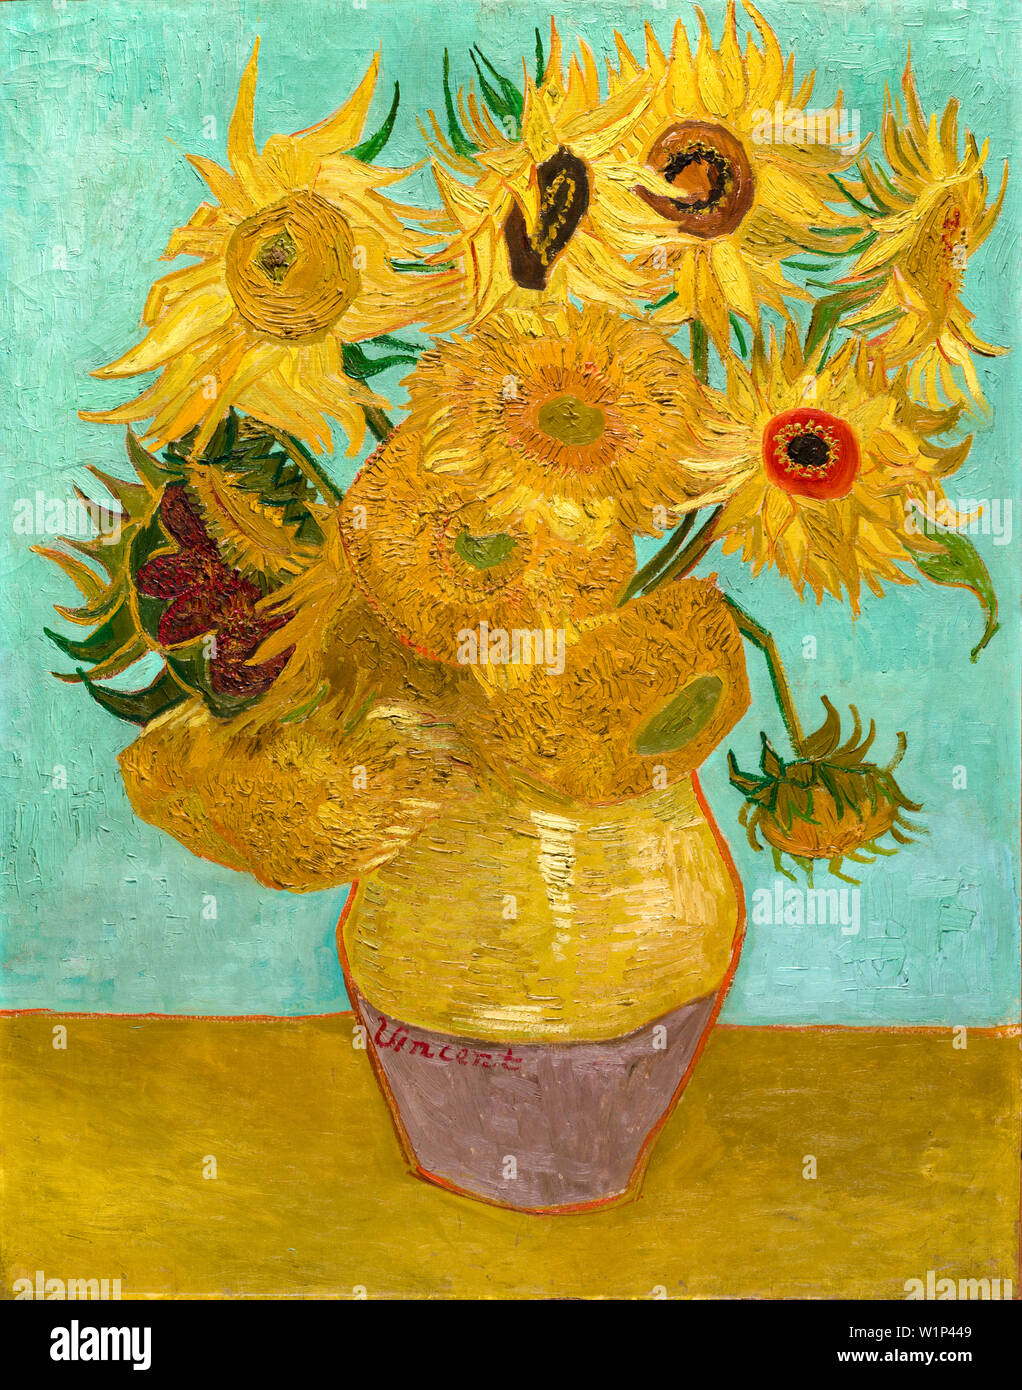 Vincent Van Gogh, Vase with Twelve Sunflowers, still life painting, 1889 Stock Photo